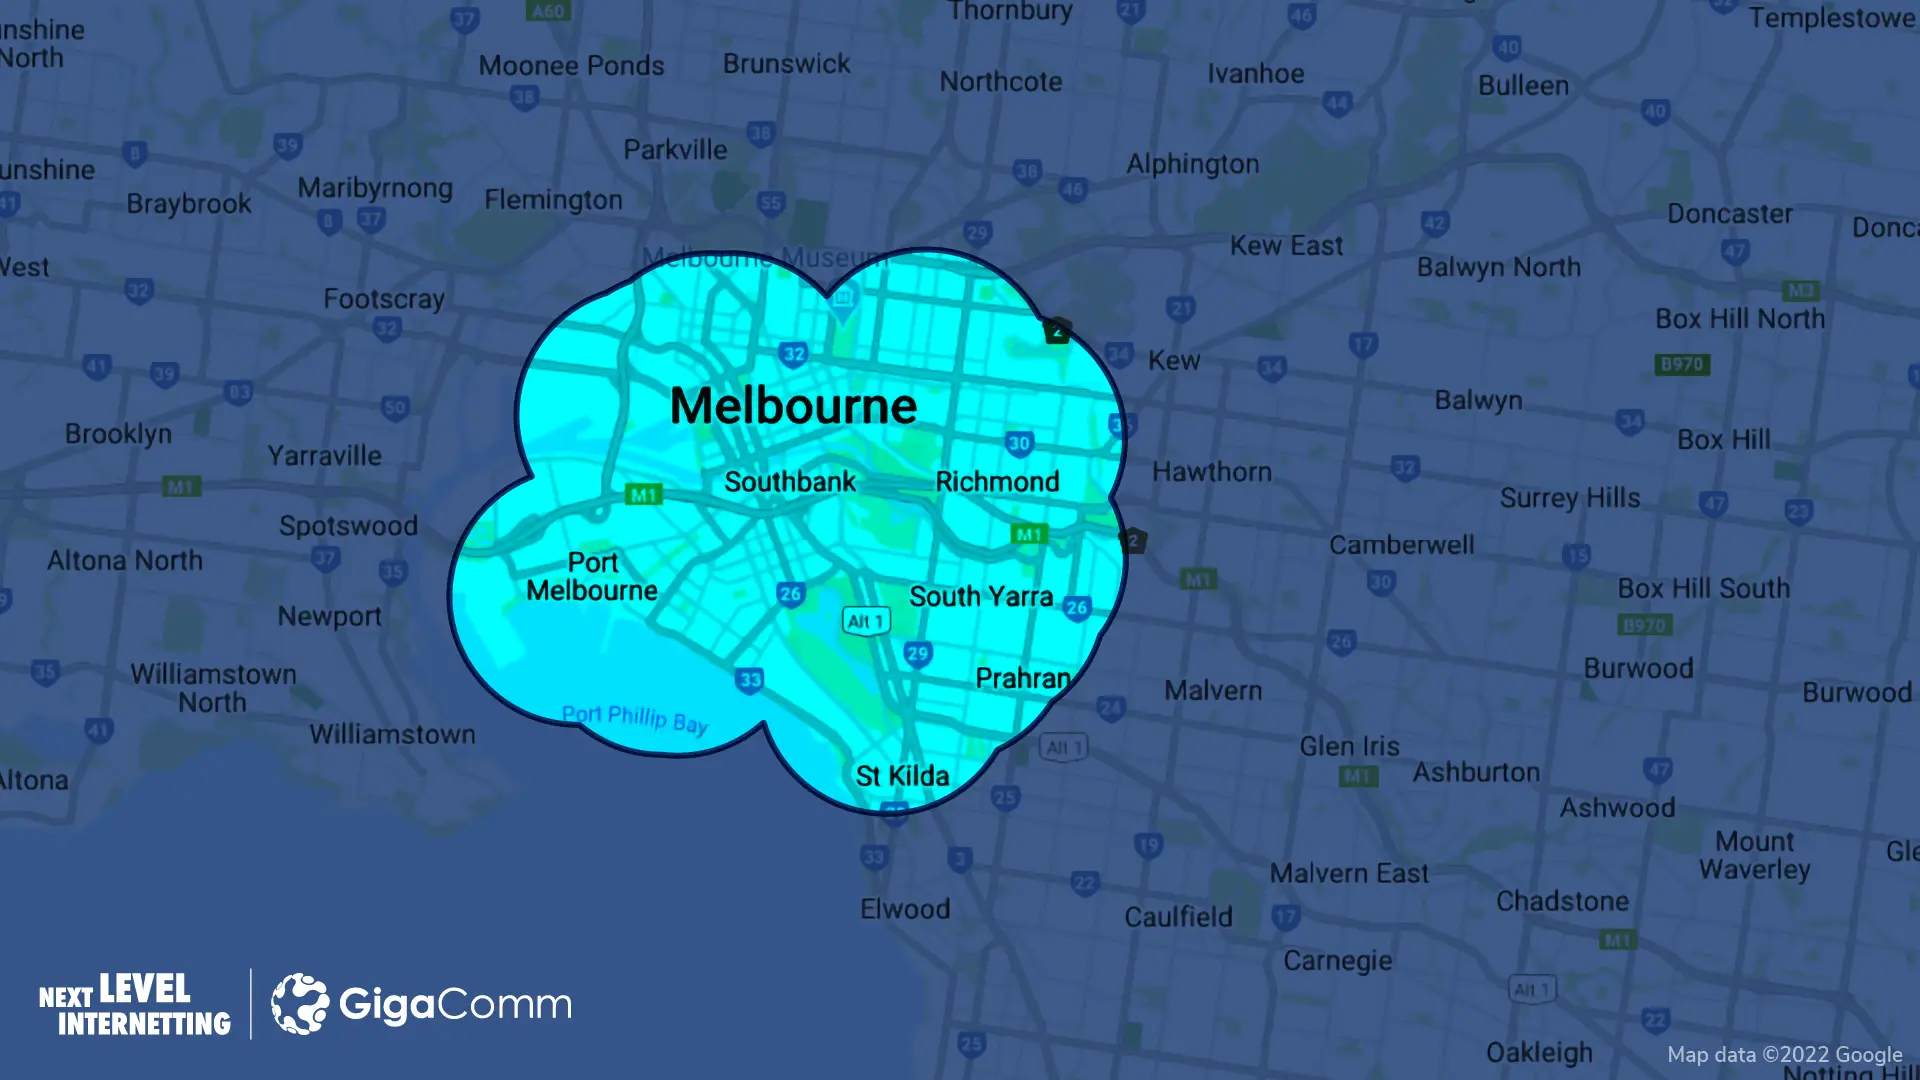 GigaComm's coverage in Melbourne 